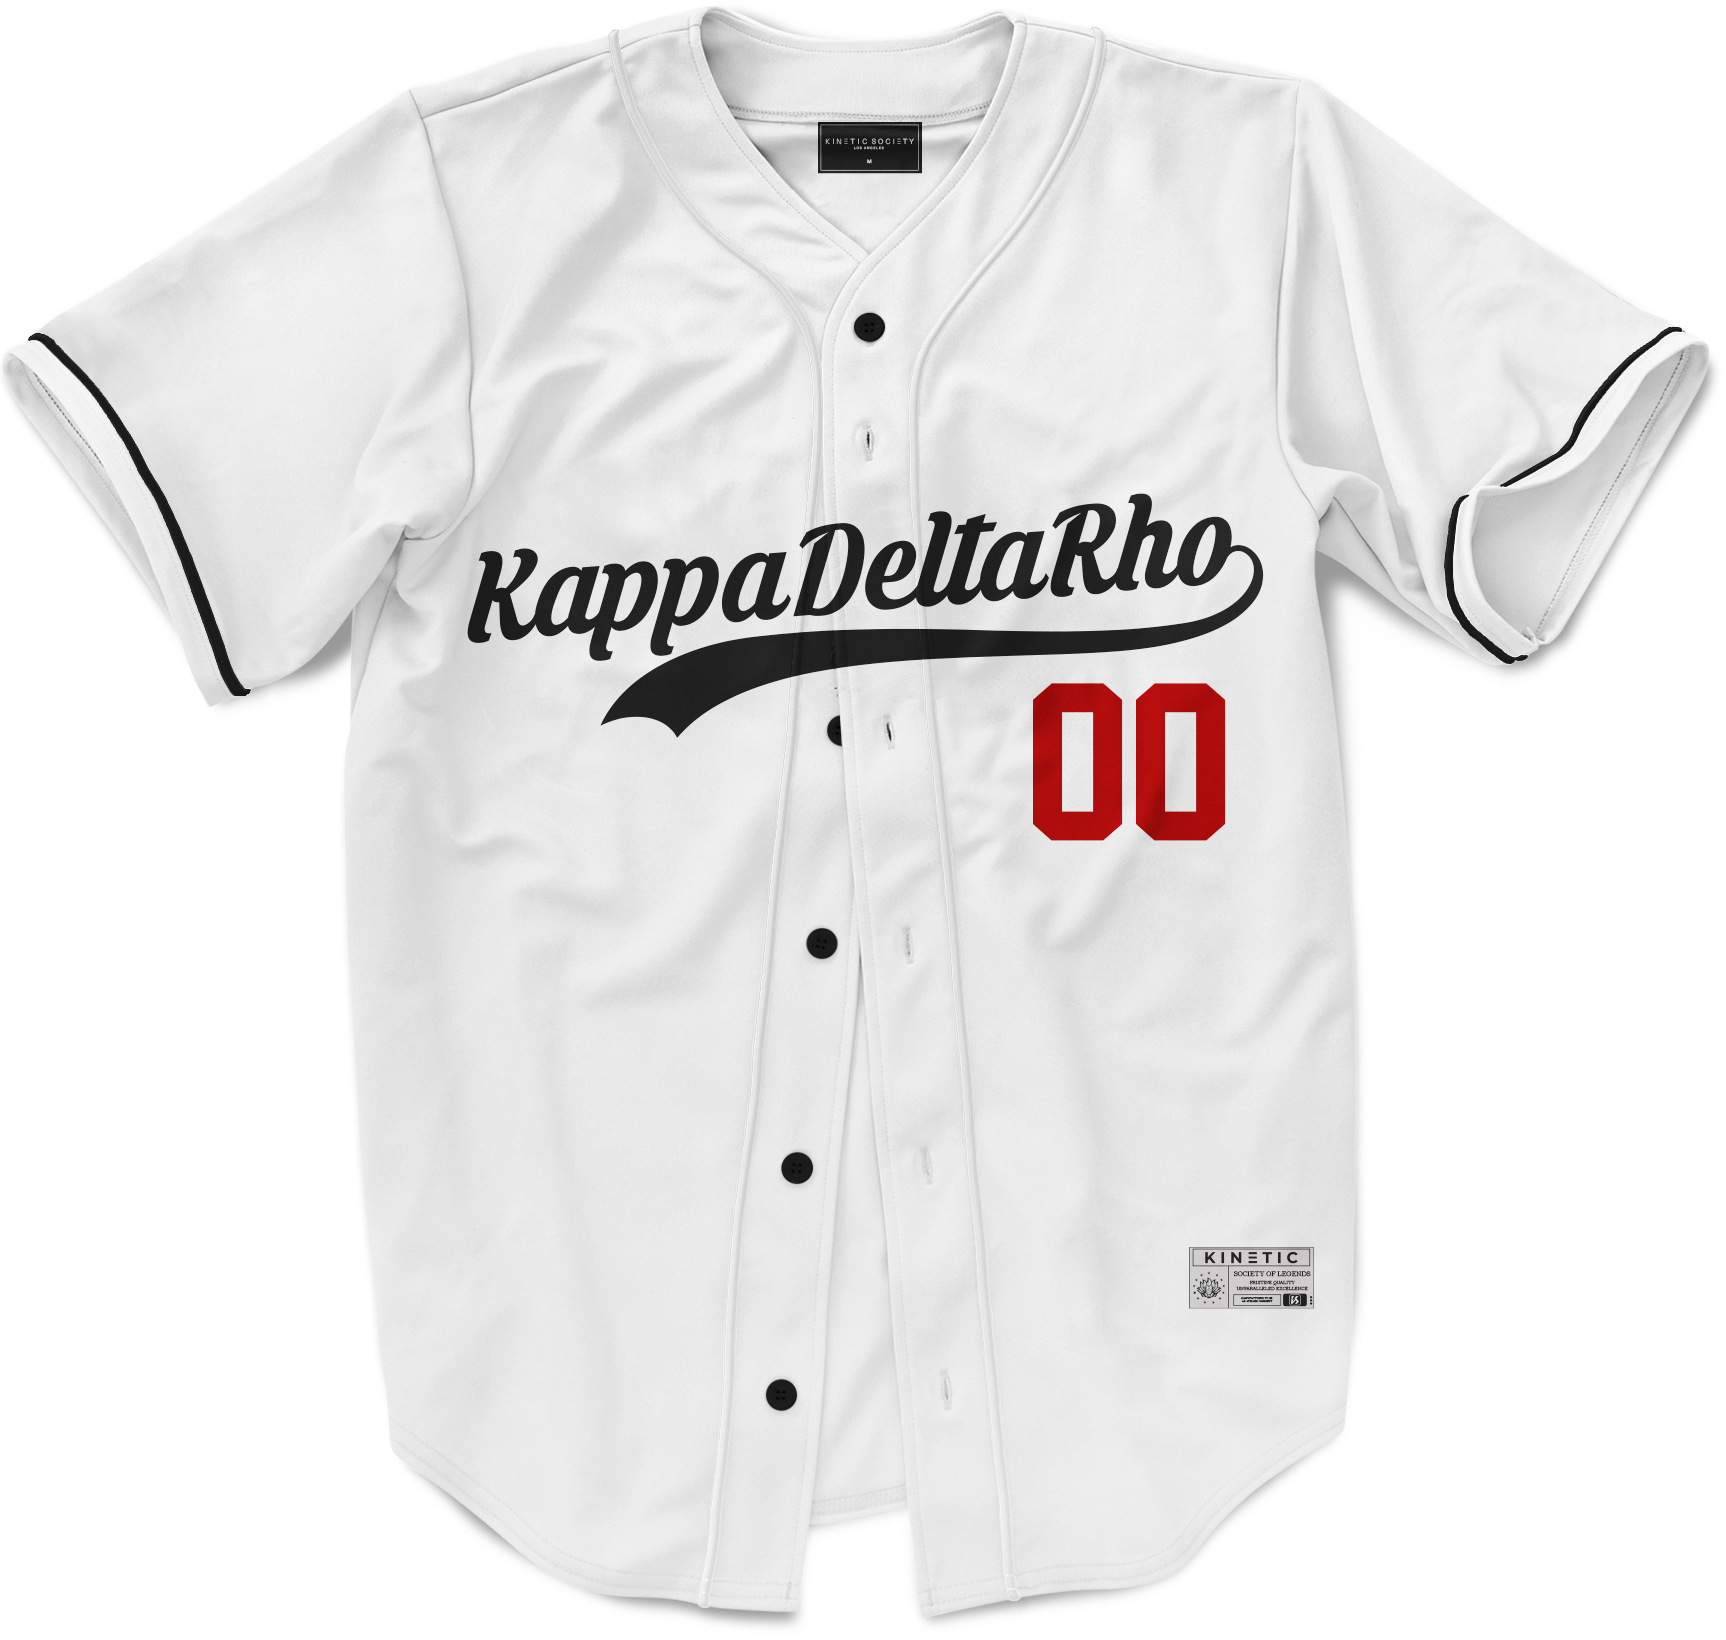 Kappa Delta Rho - Classic Ballpark Red Baseball Jersey